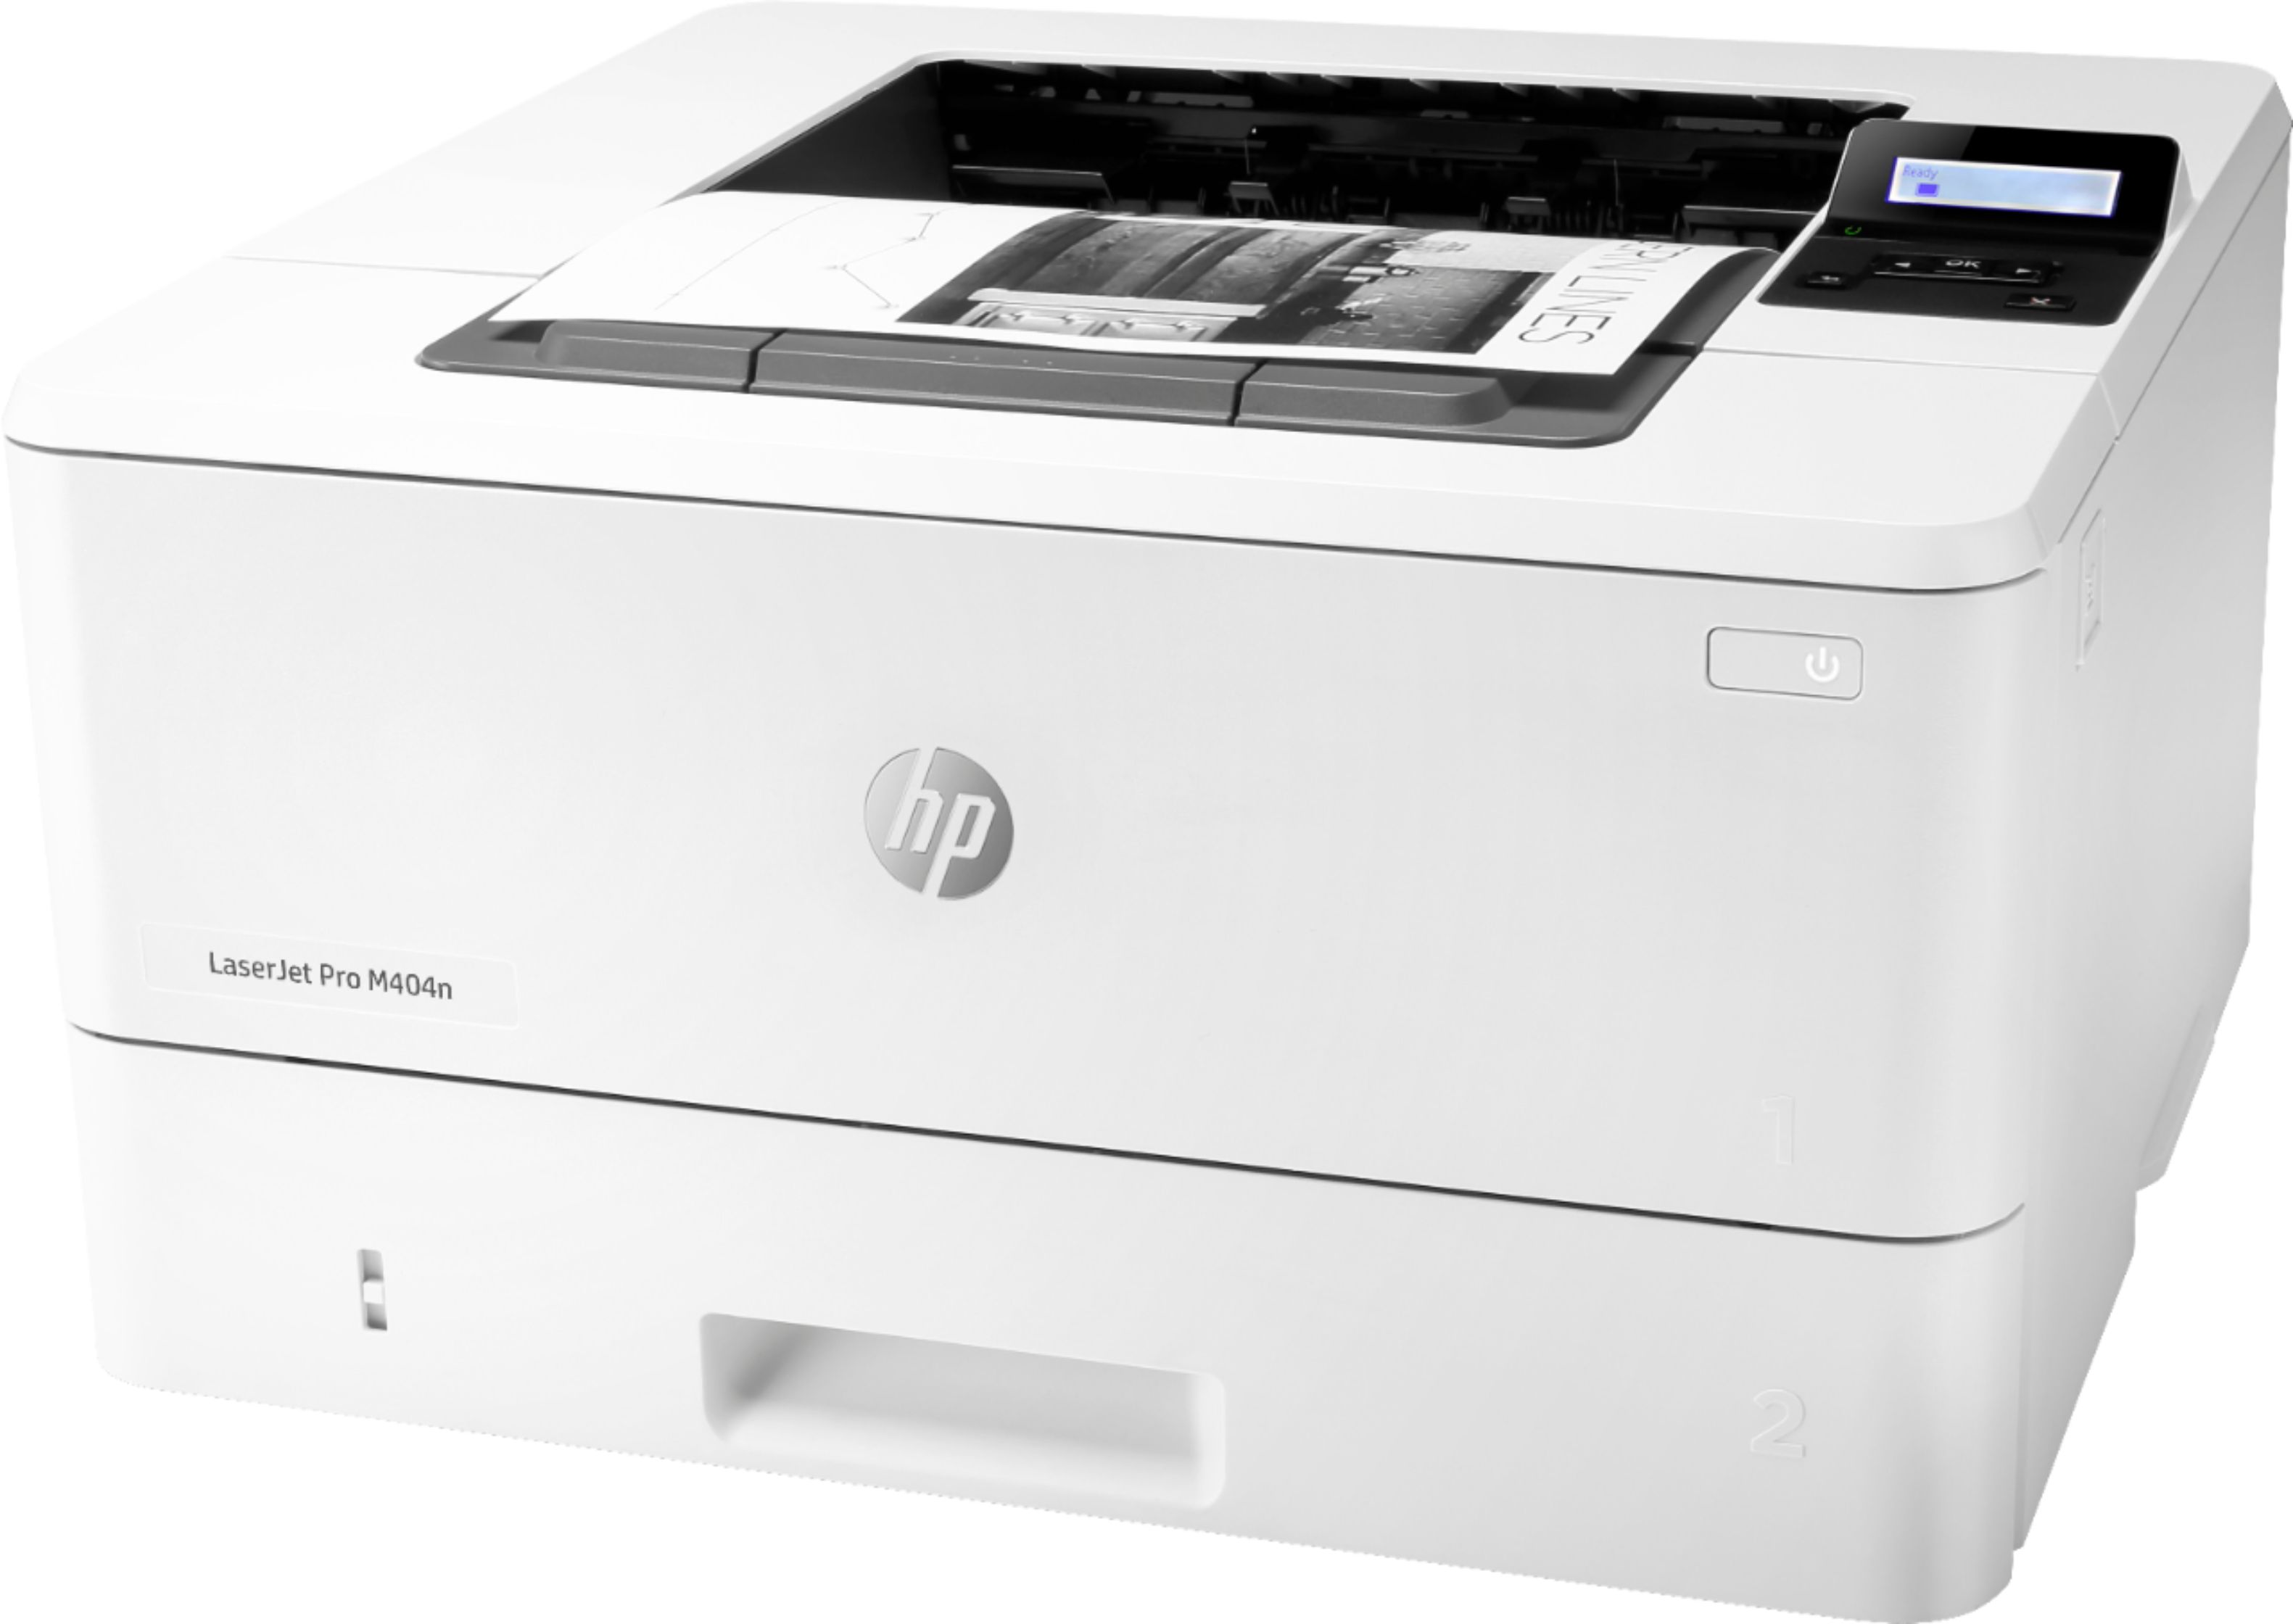 Left View: HP - LaserJet Pro M404n Black-and-White Laser Printer - White